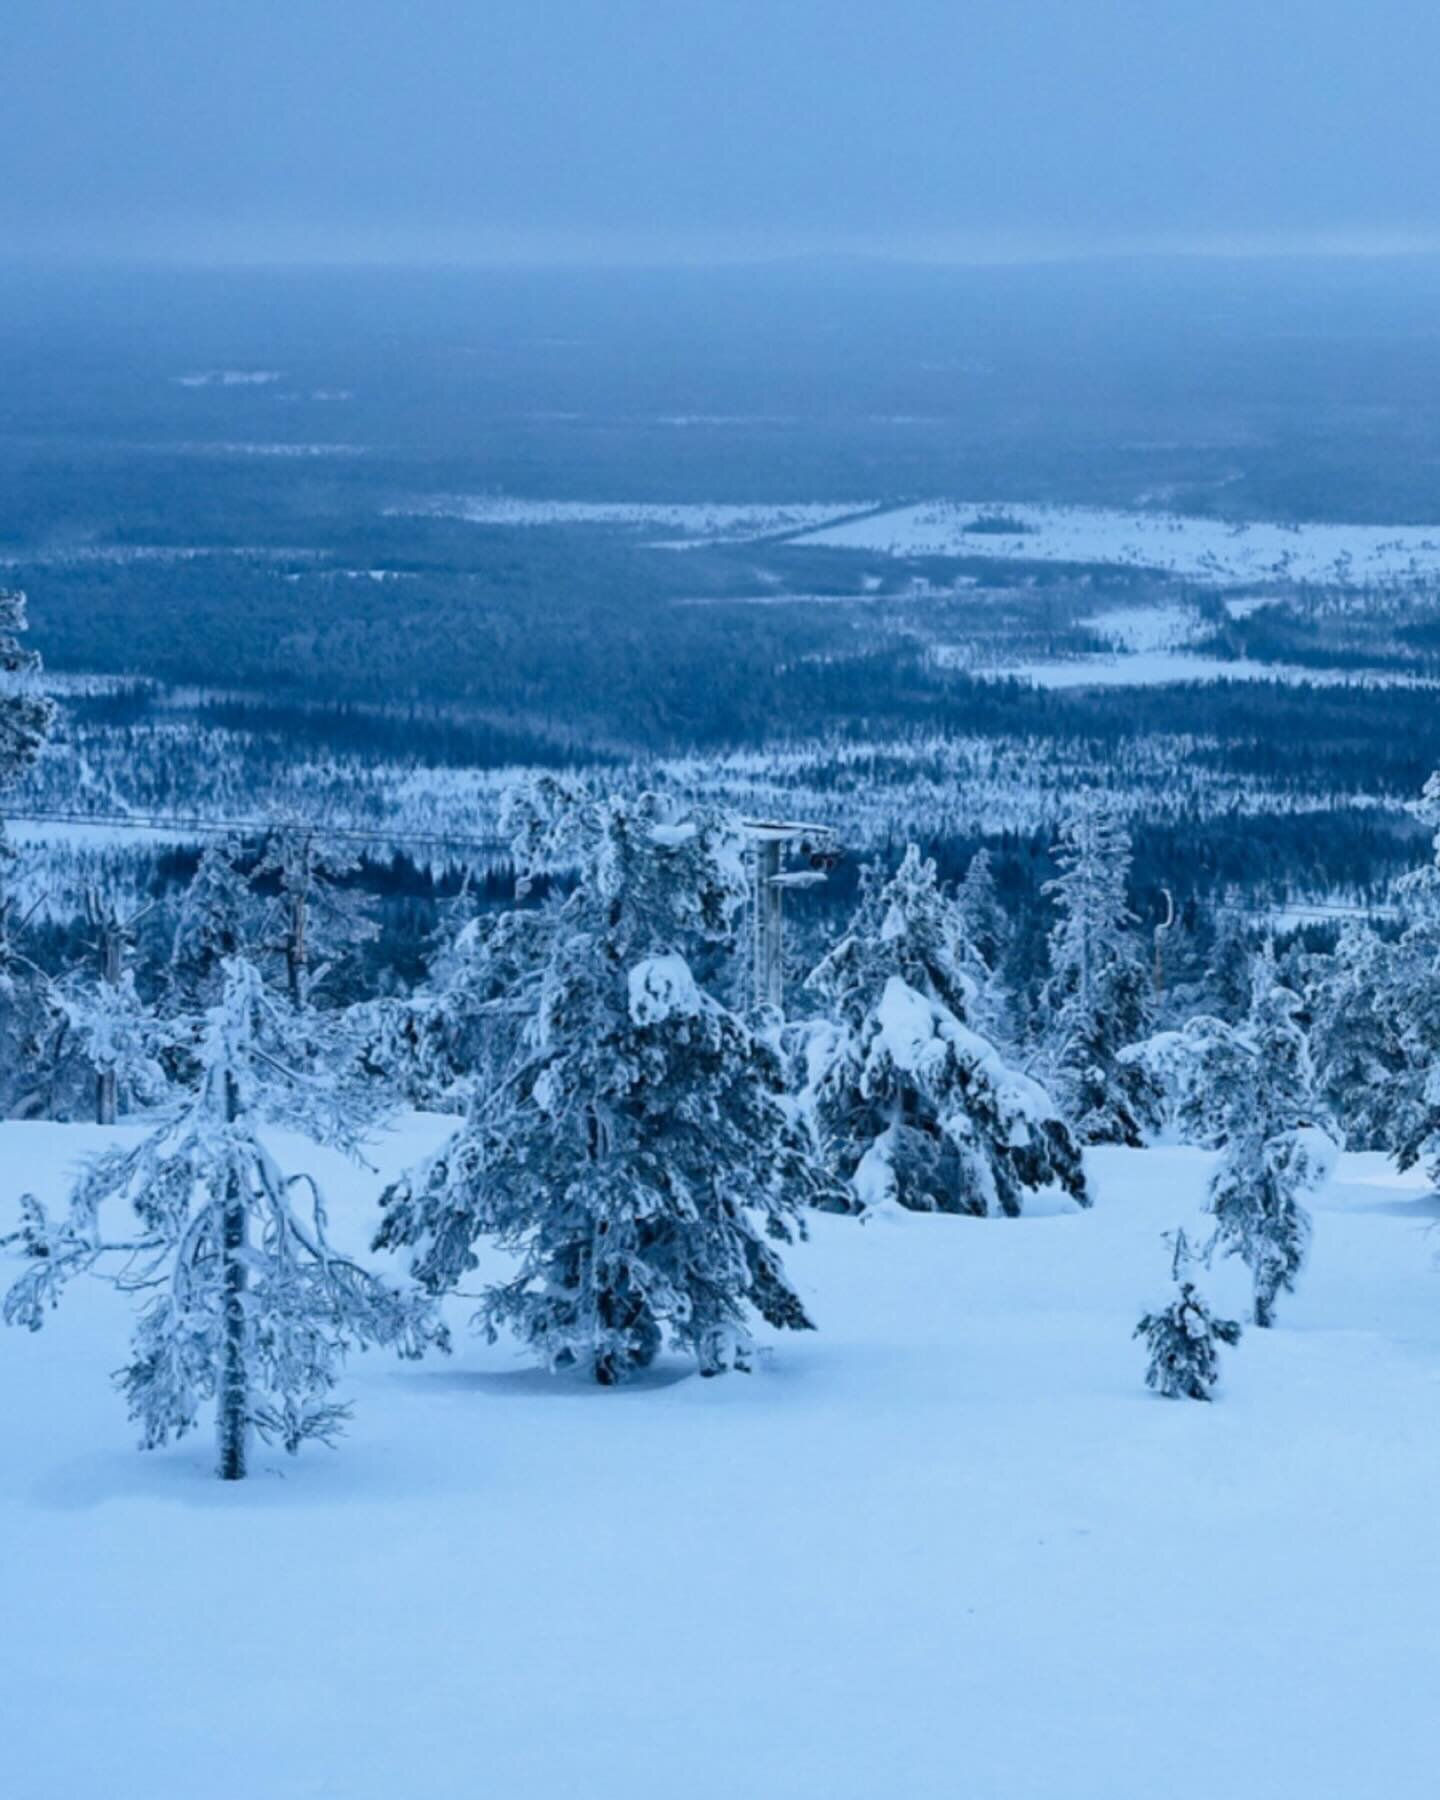 The landscapes of Levi, Finland 🇫🇮 

#Finland #arcticcircle #laplandfinland